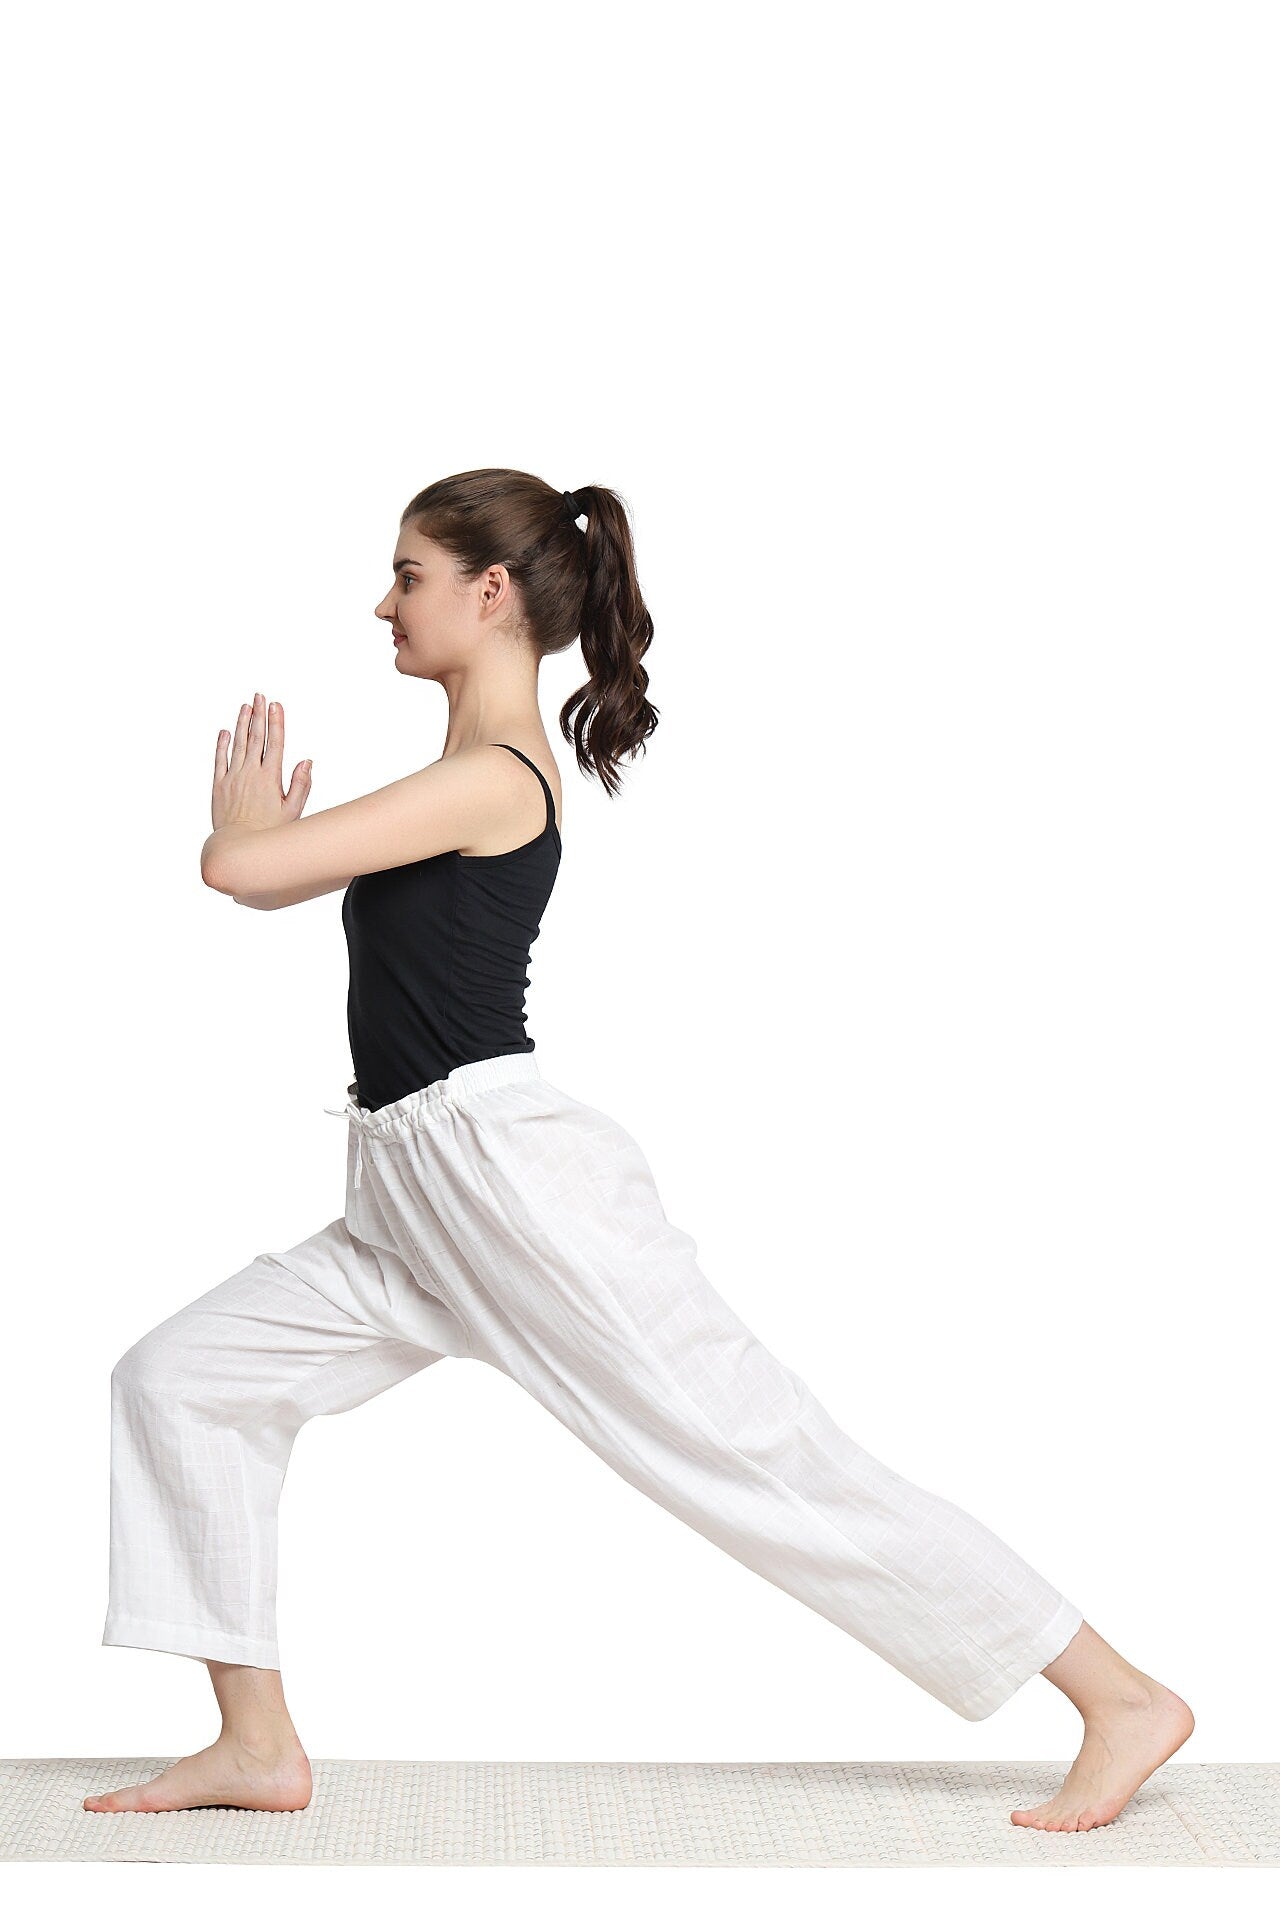 Custom Yoga Pants - Organic Cotton, Fitness Pants, Cotton Trousers, Unisex Yoga Pants, Boho Pants - Elastic Waist, Straight Cut